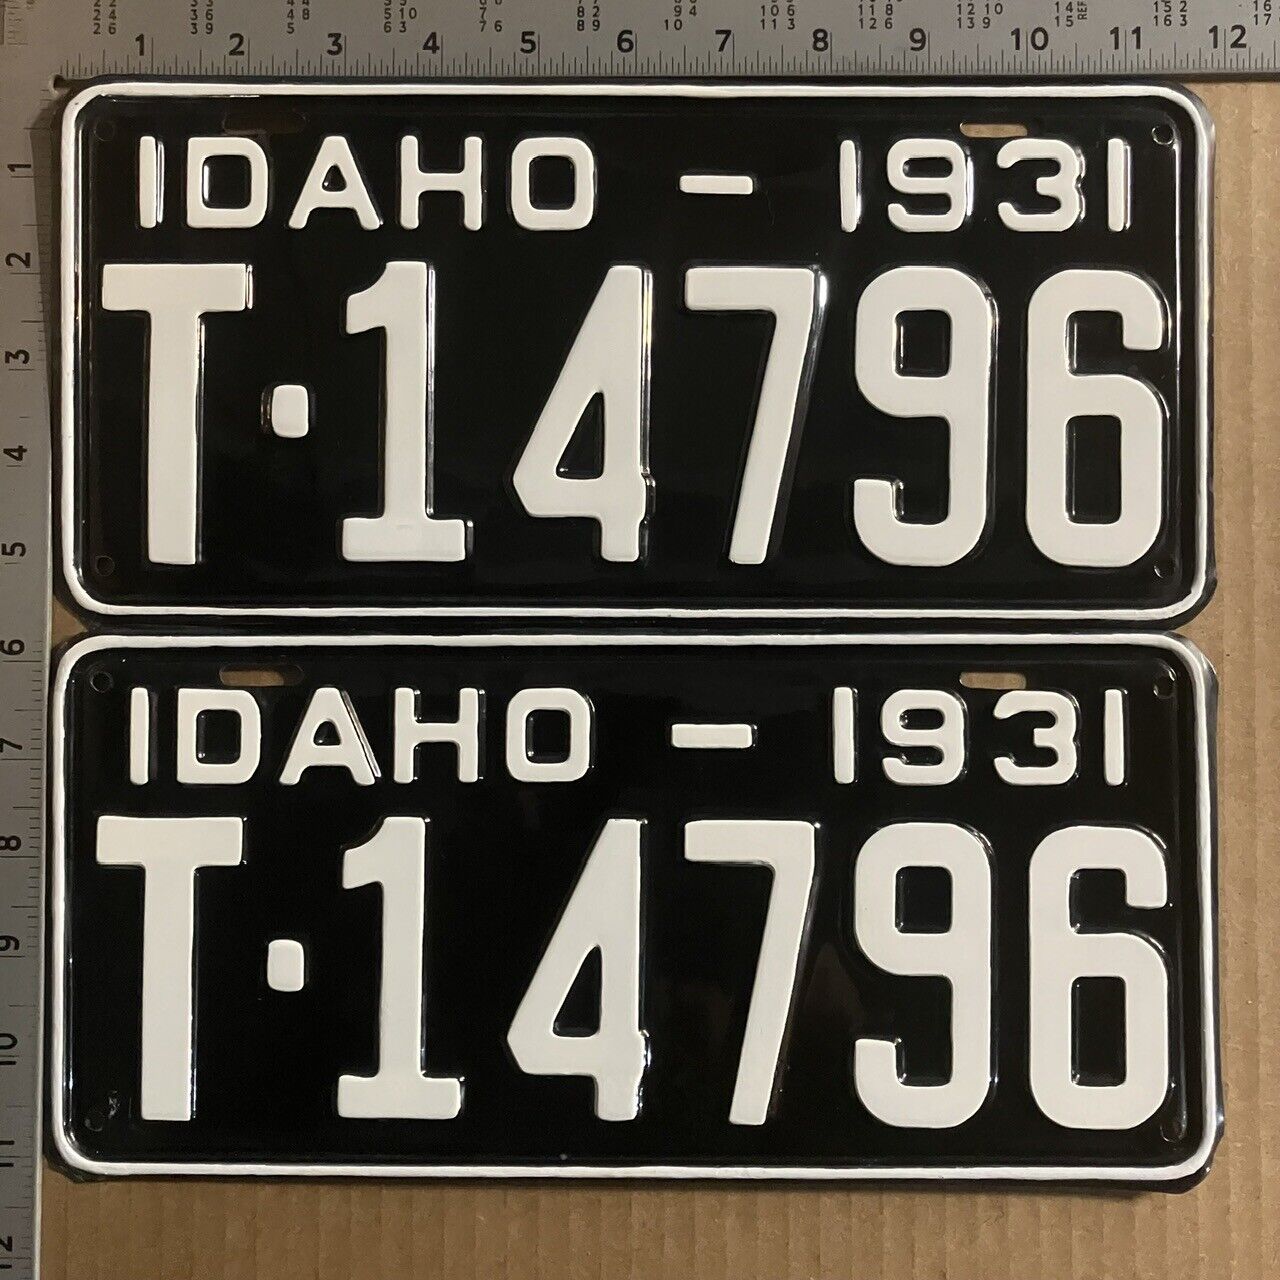 1931 Idaho truck license plate pair T-14796 YOM DMV Ford Chevy Dodge 11776